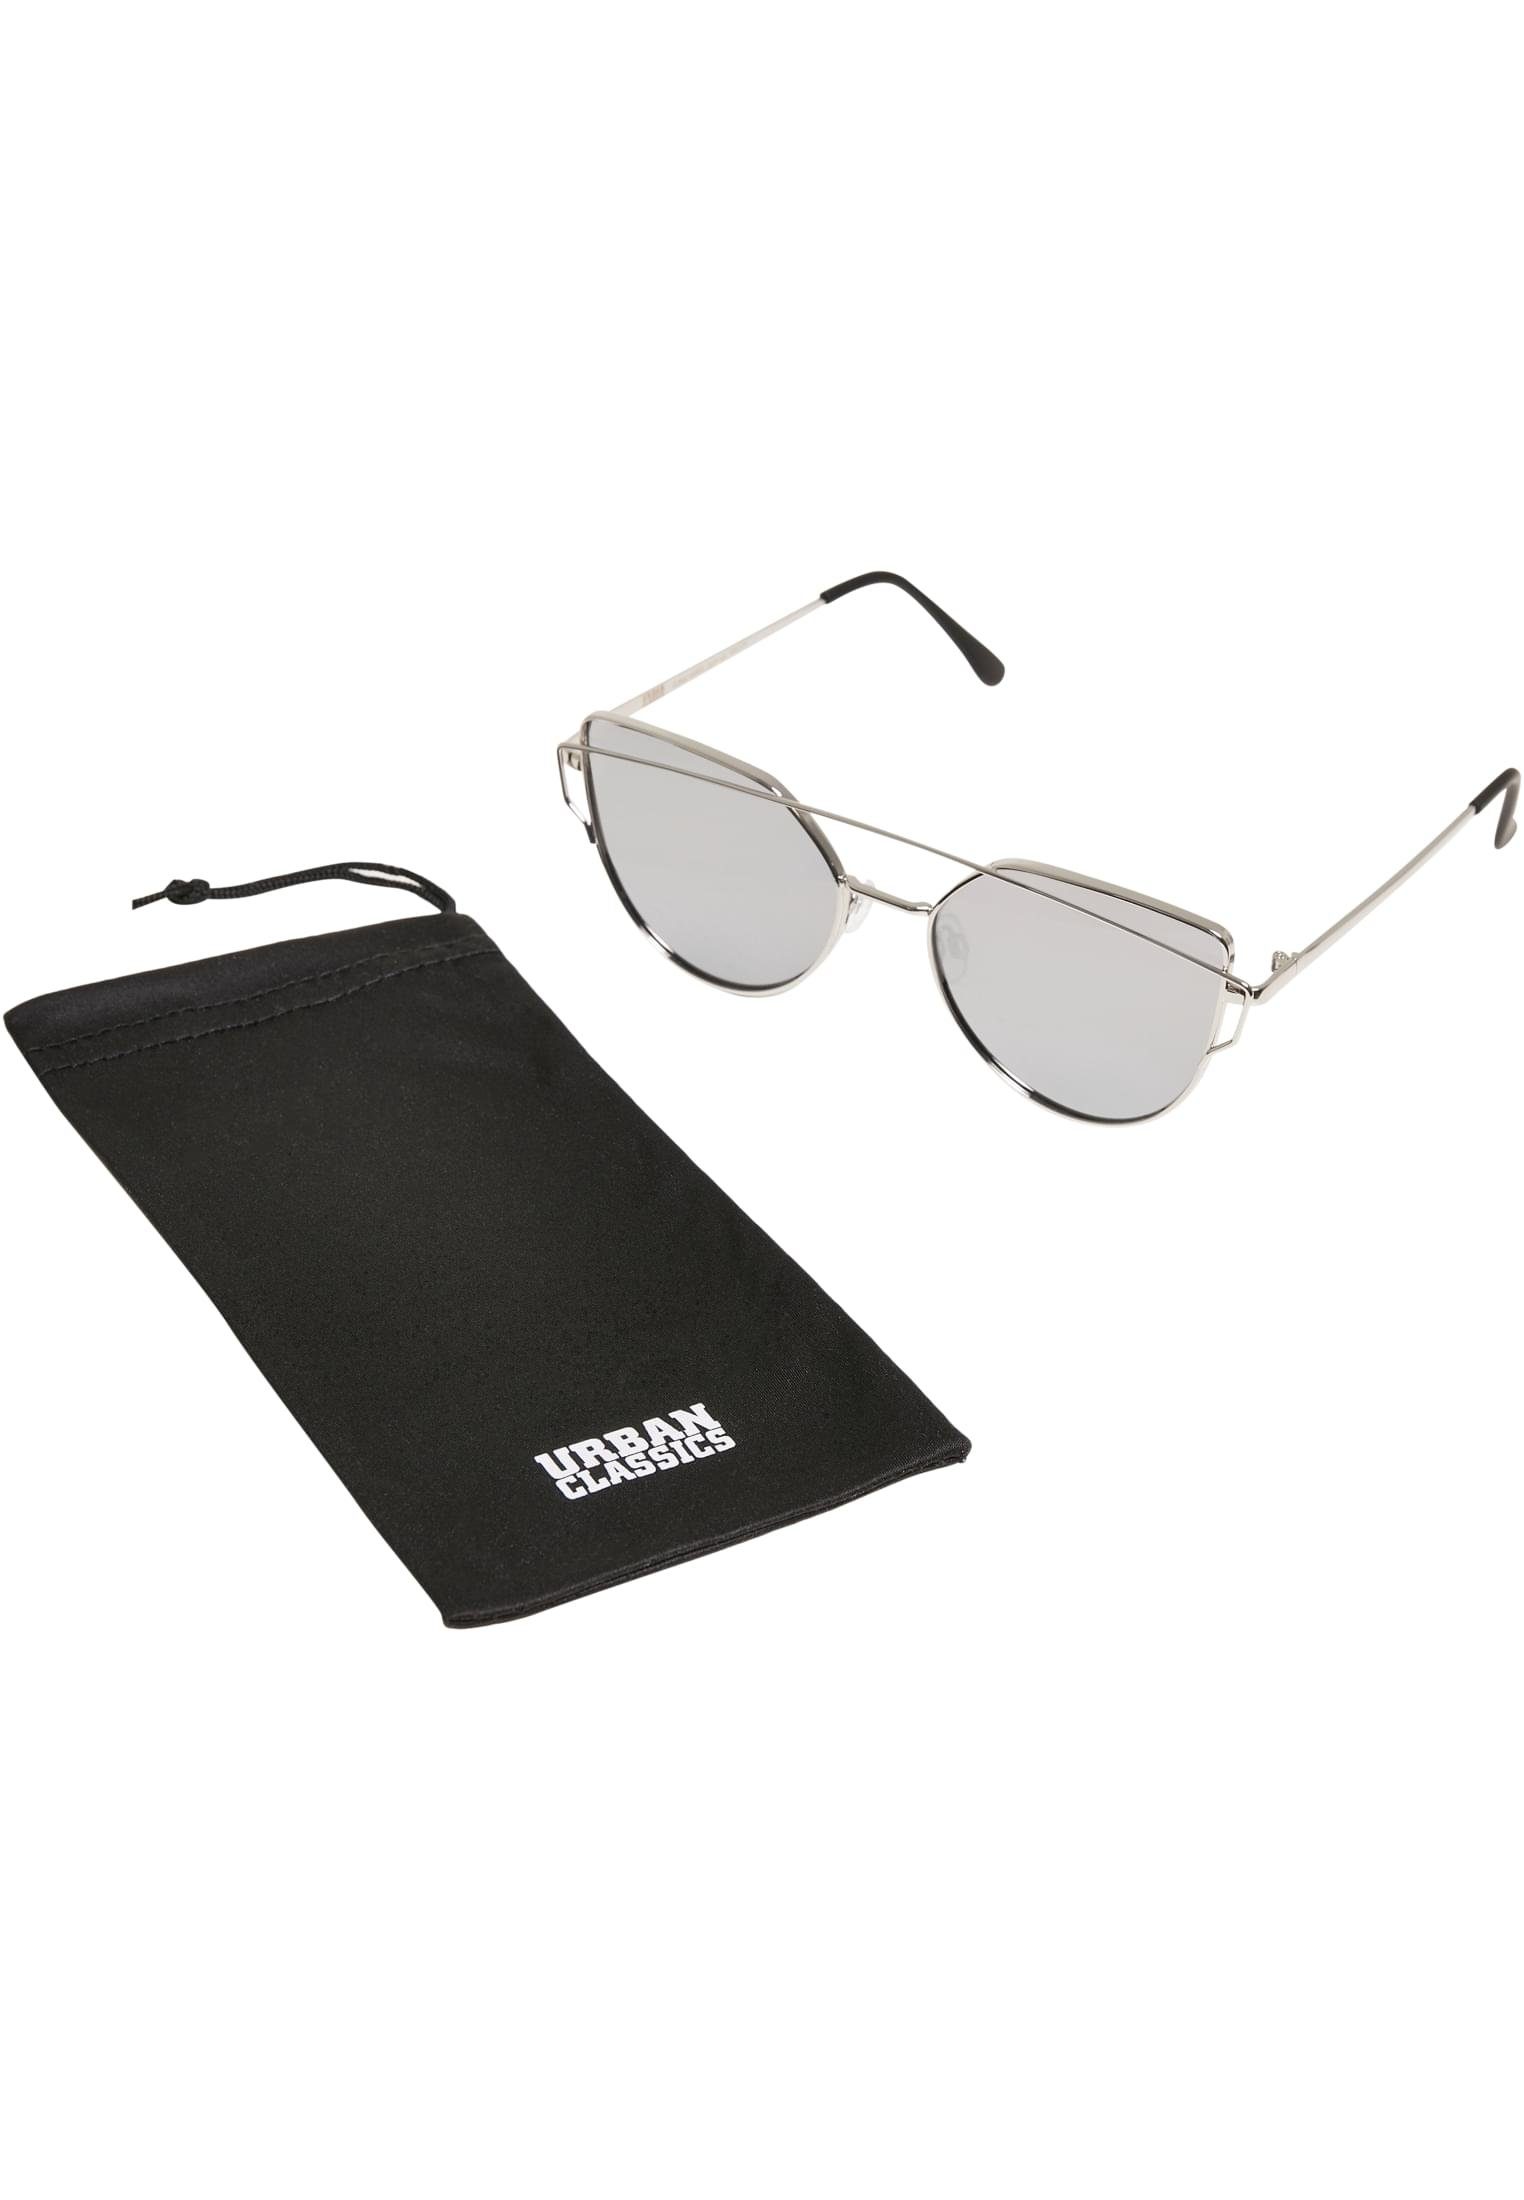 URBAN CLASSICS Sonnenbrille Accessoires Sunglasses July UC silver